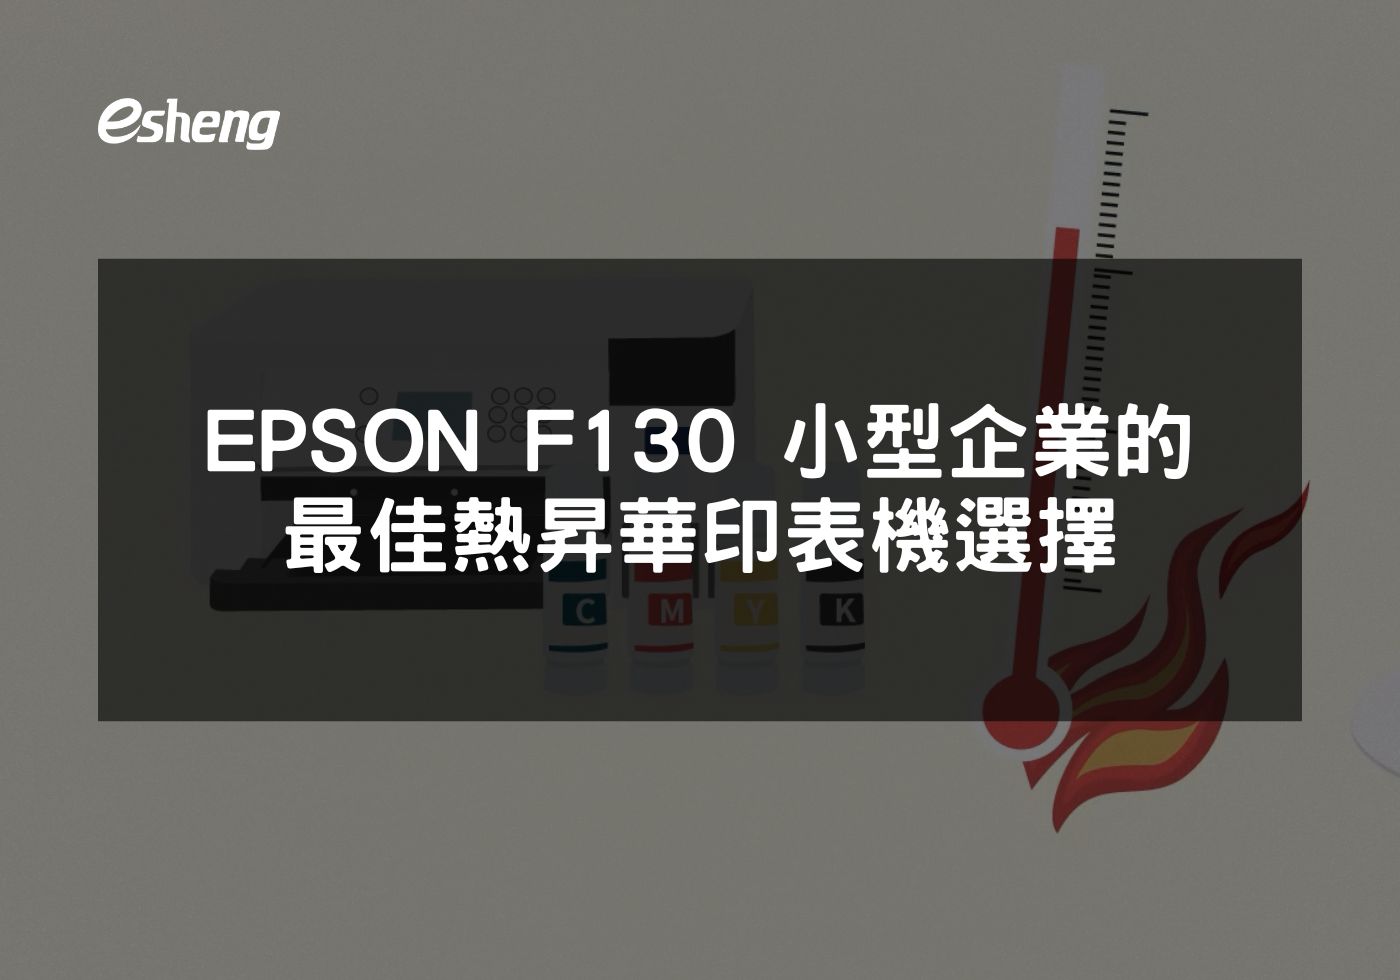 EPSON F130 小型企業的最佳熱昇華印表機選擇